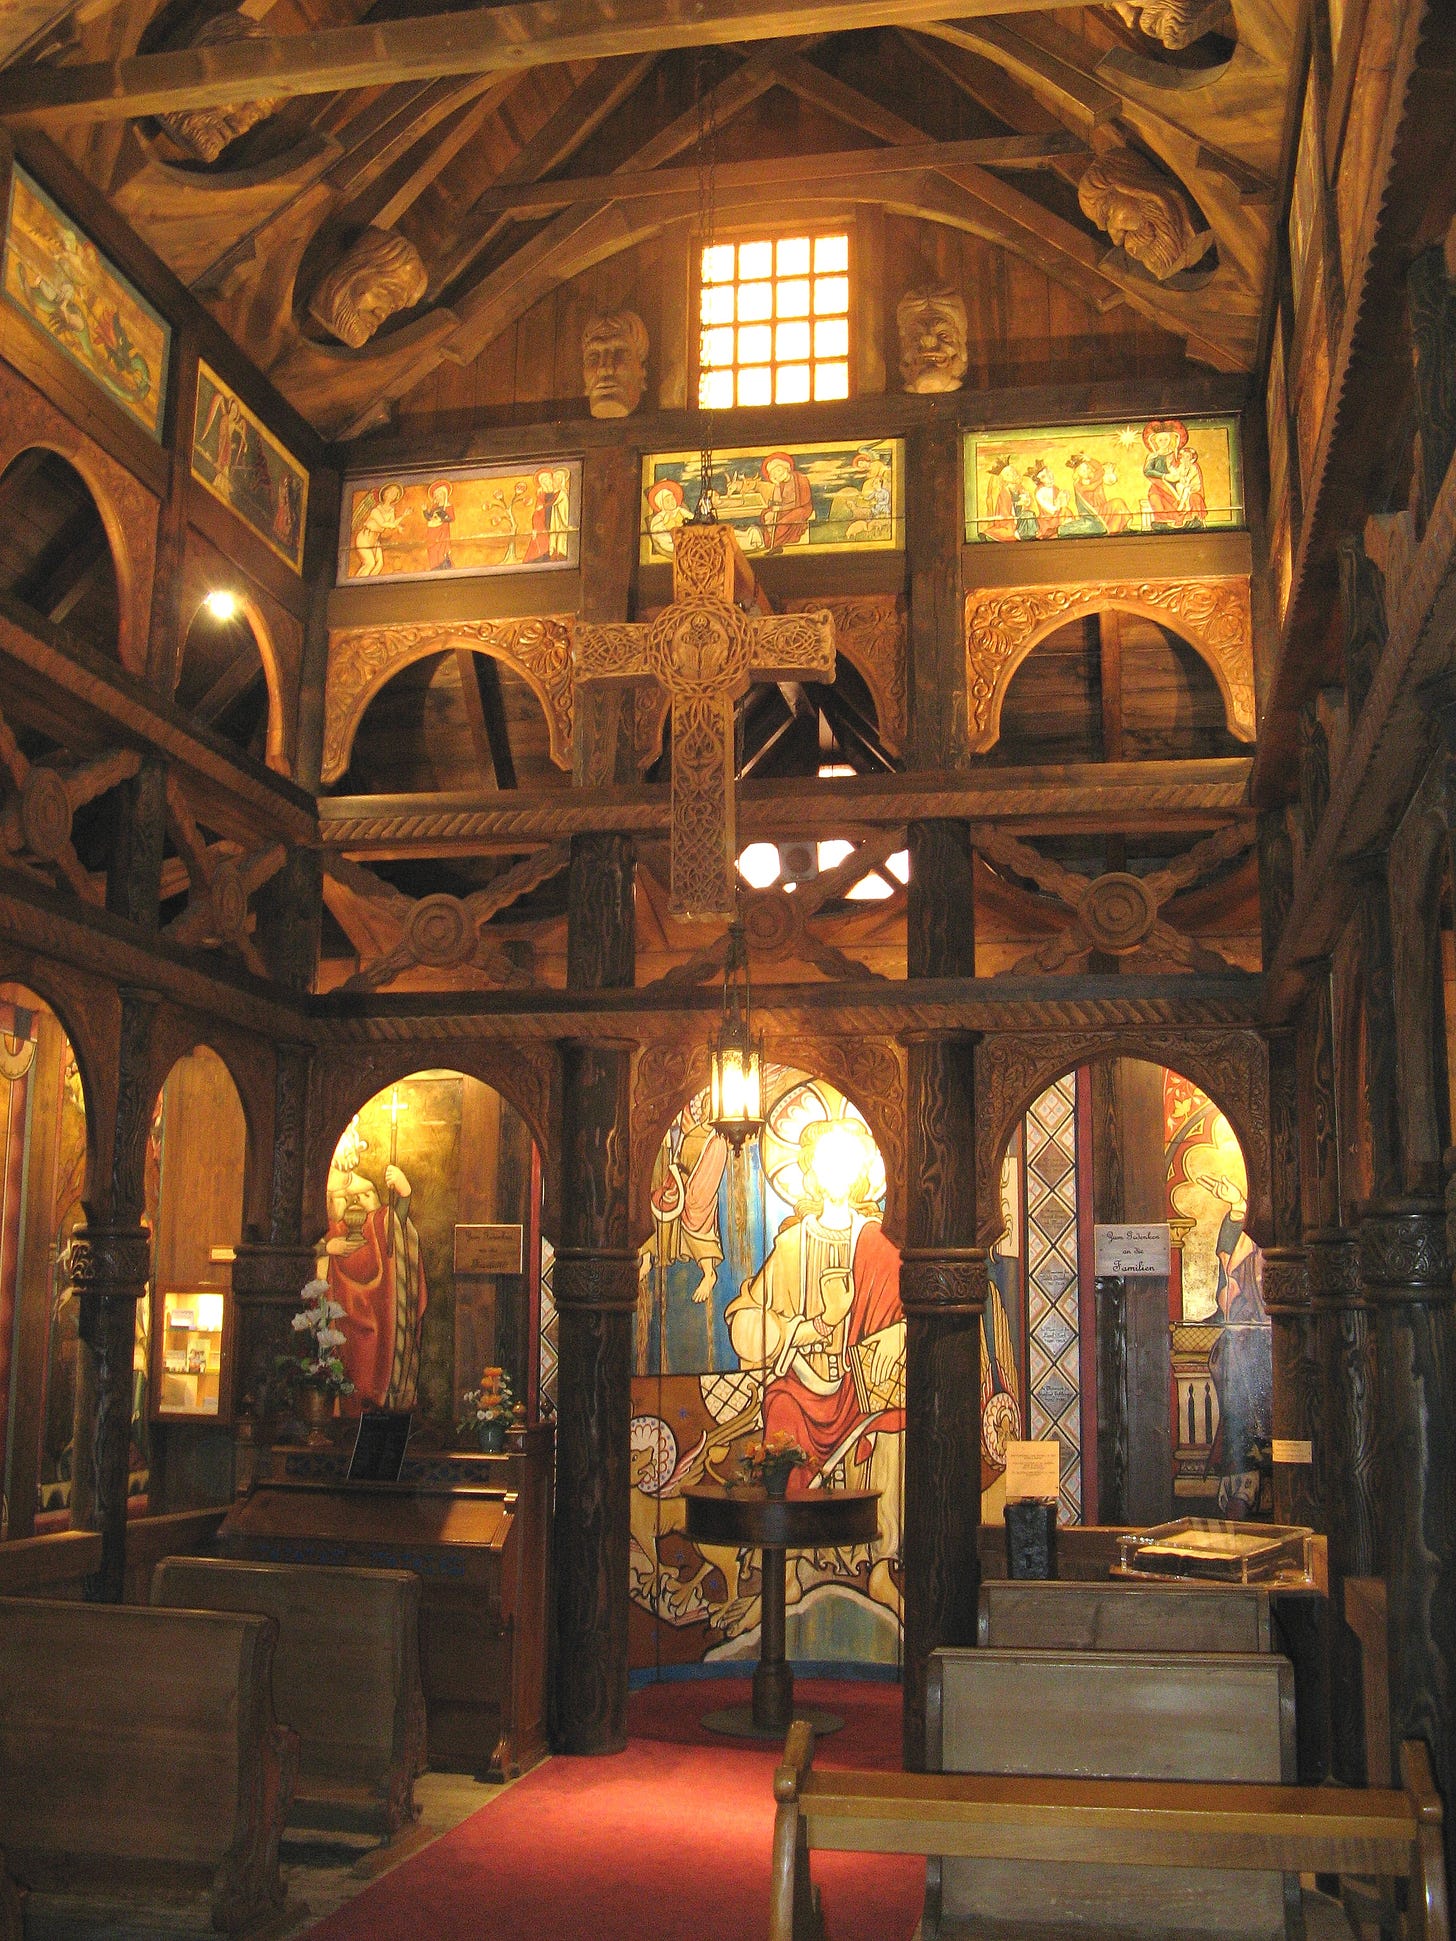 File:Stave-Church-Replicate-Europapark-Interior.jpg - Wikimedia Commons